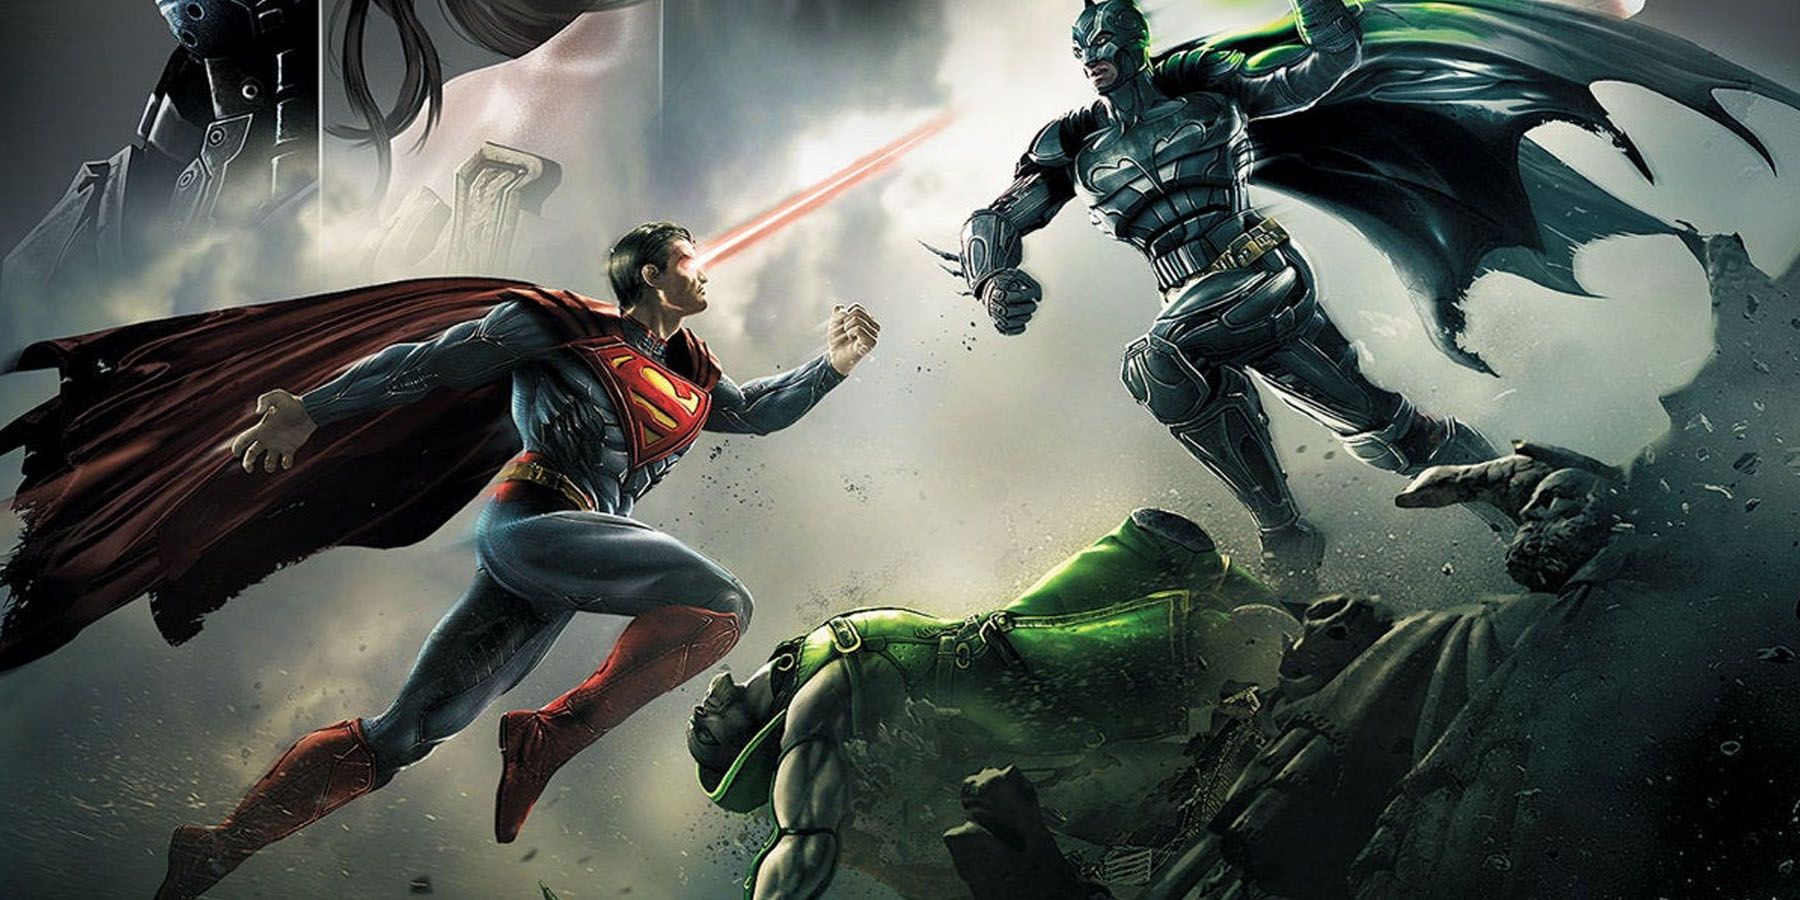 Superman versus Batman in Injustice